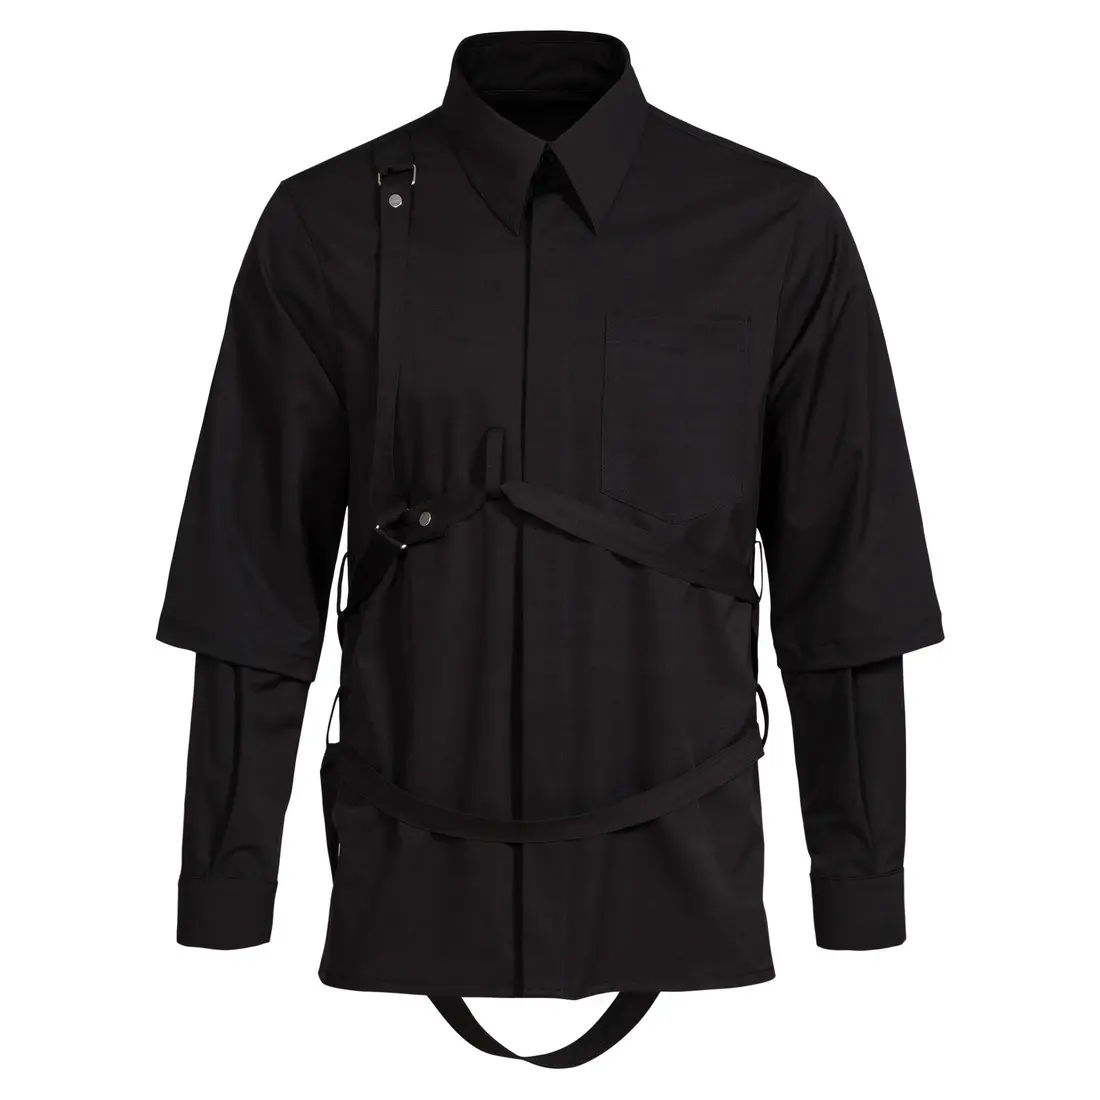 Moda de estilo japonés y coreano como camisas de dos piezas para hombre Camisas de manga doble con correa negra oscura